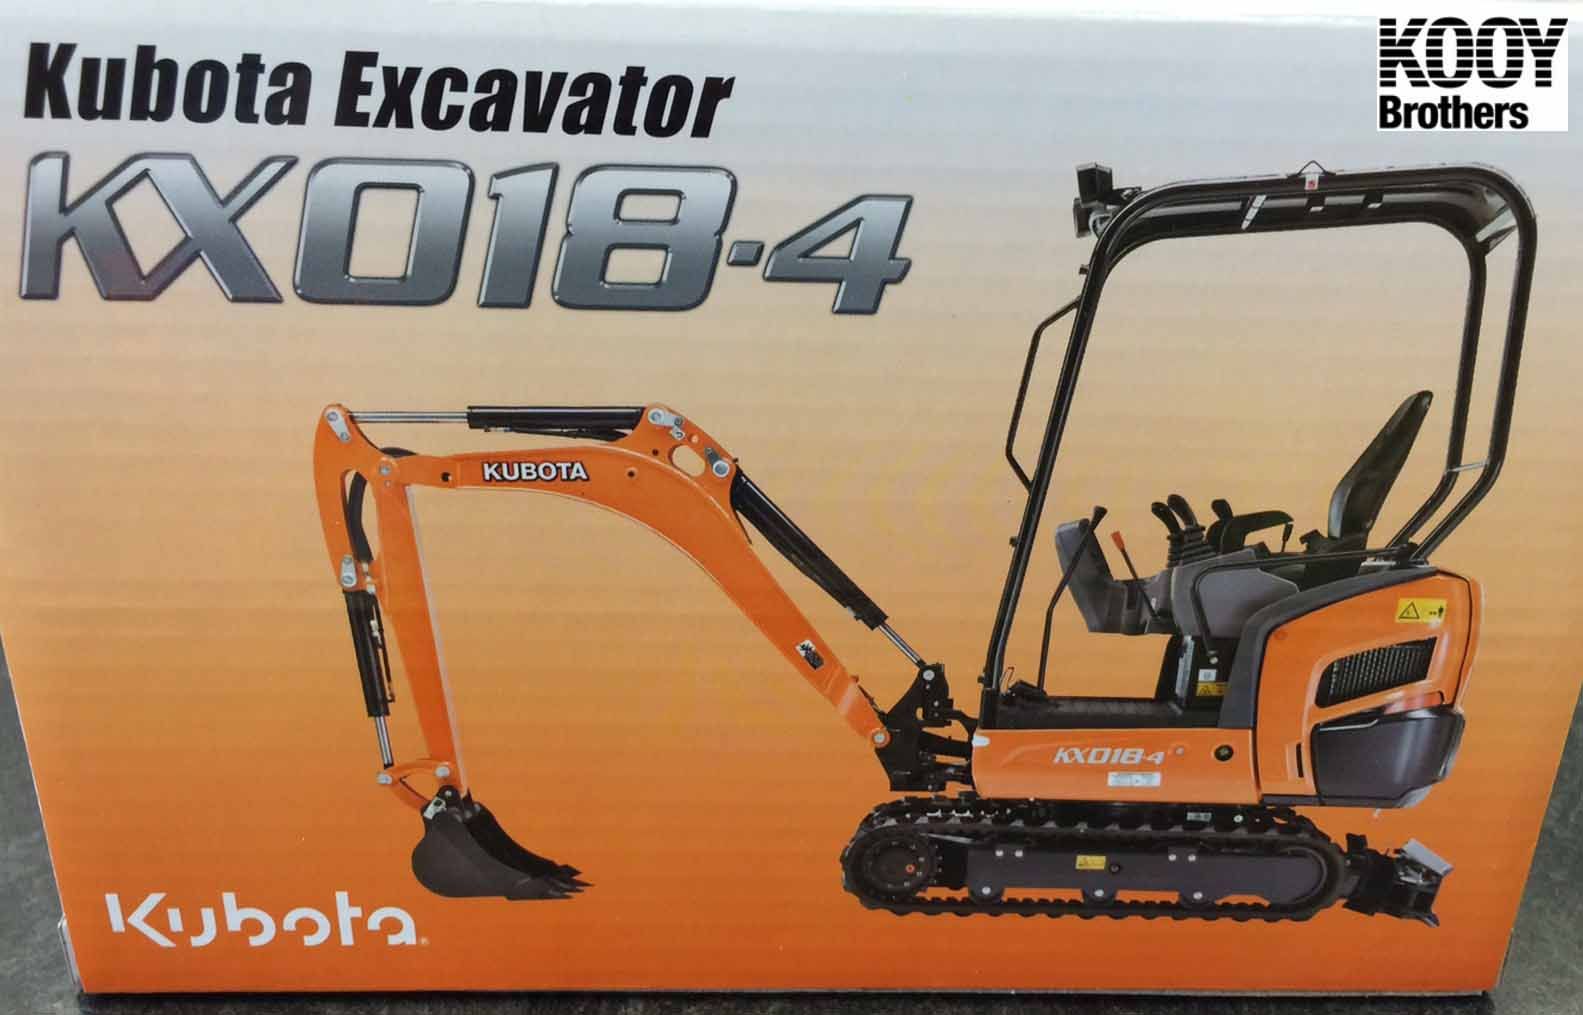 KX018-4 Kubota excavator collector toy